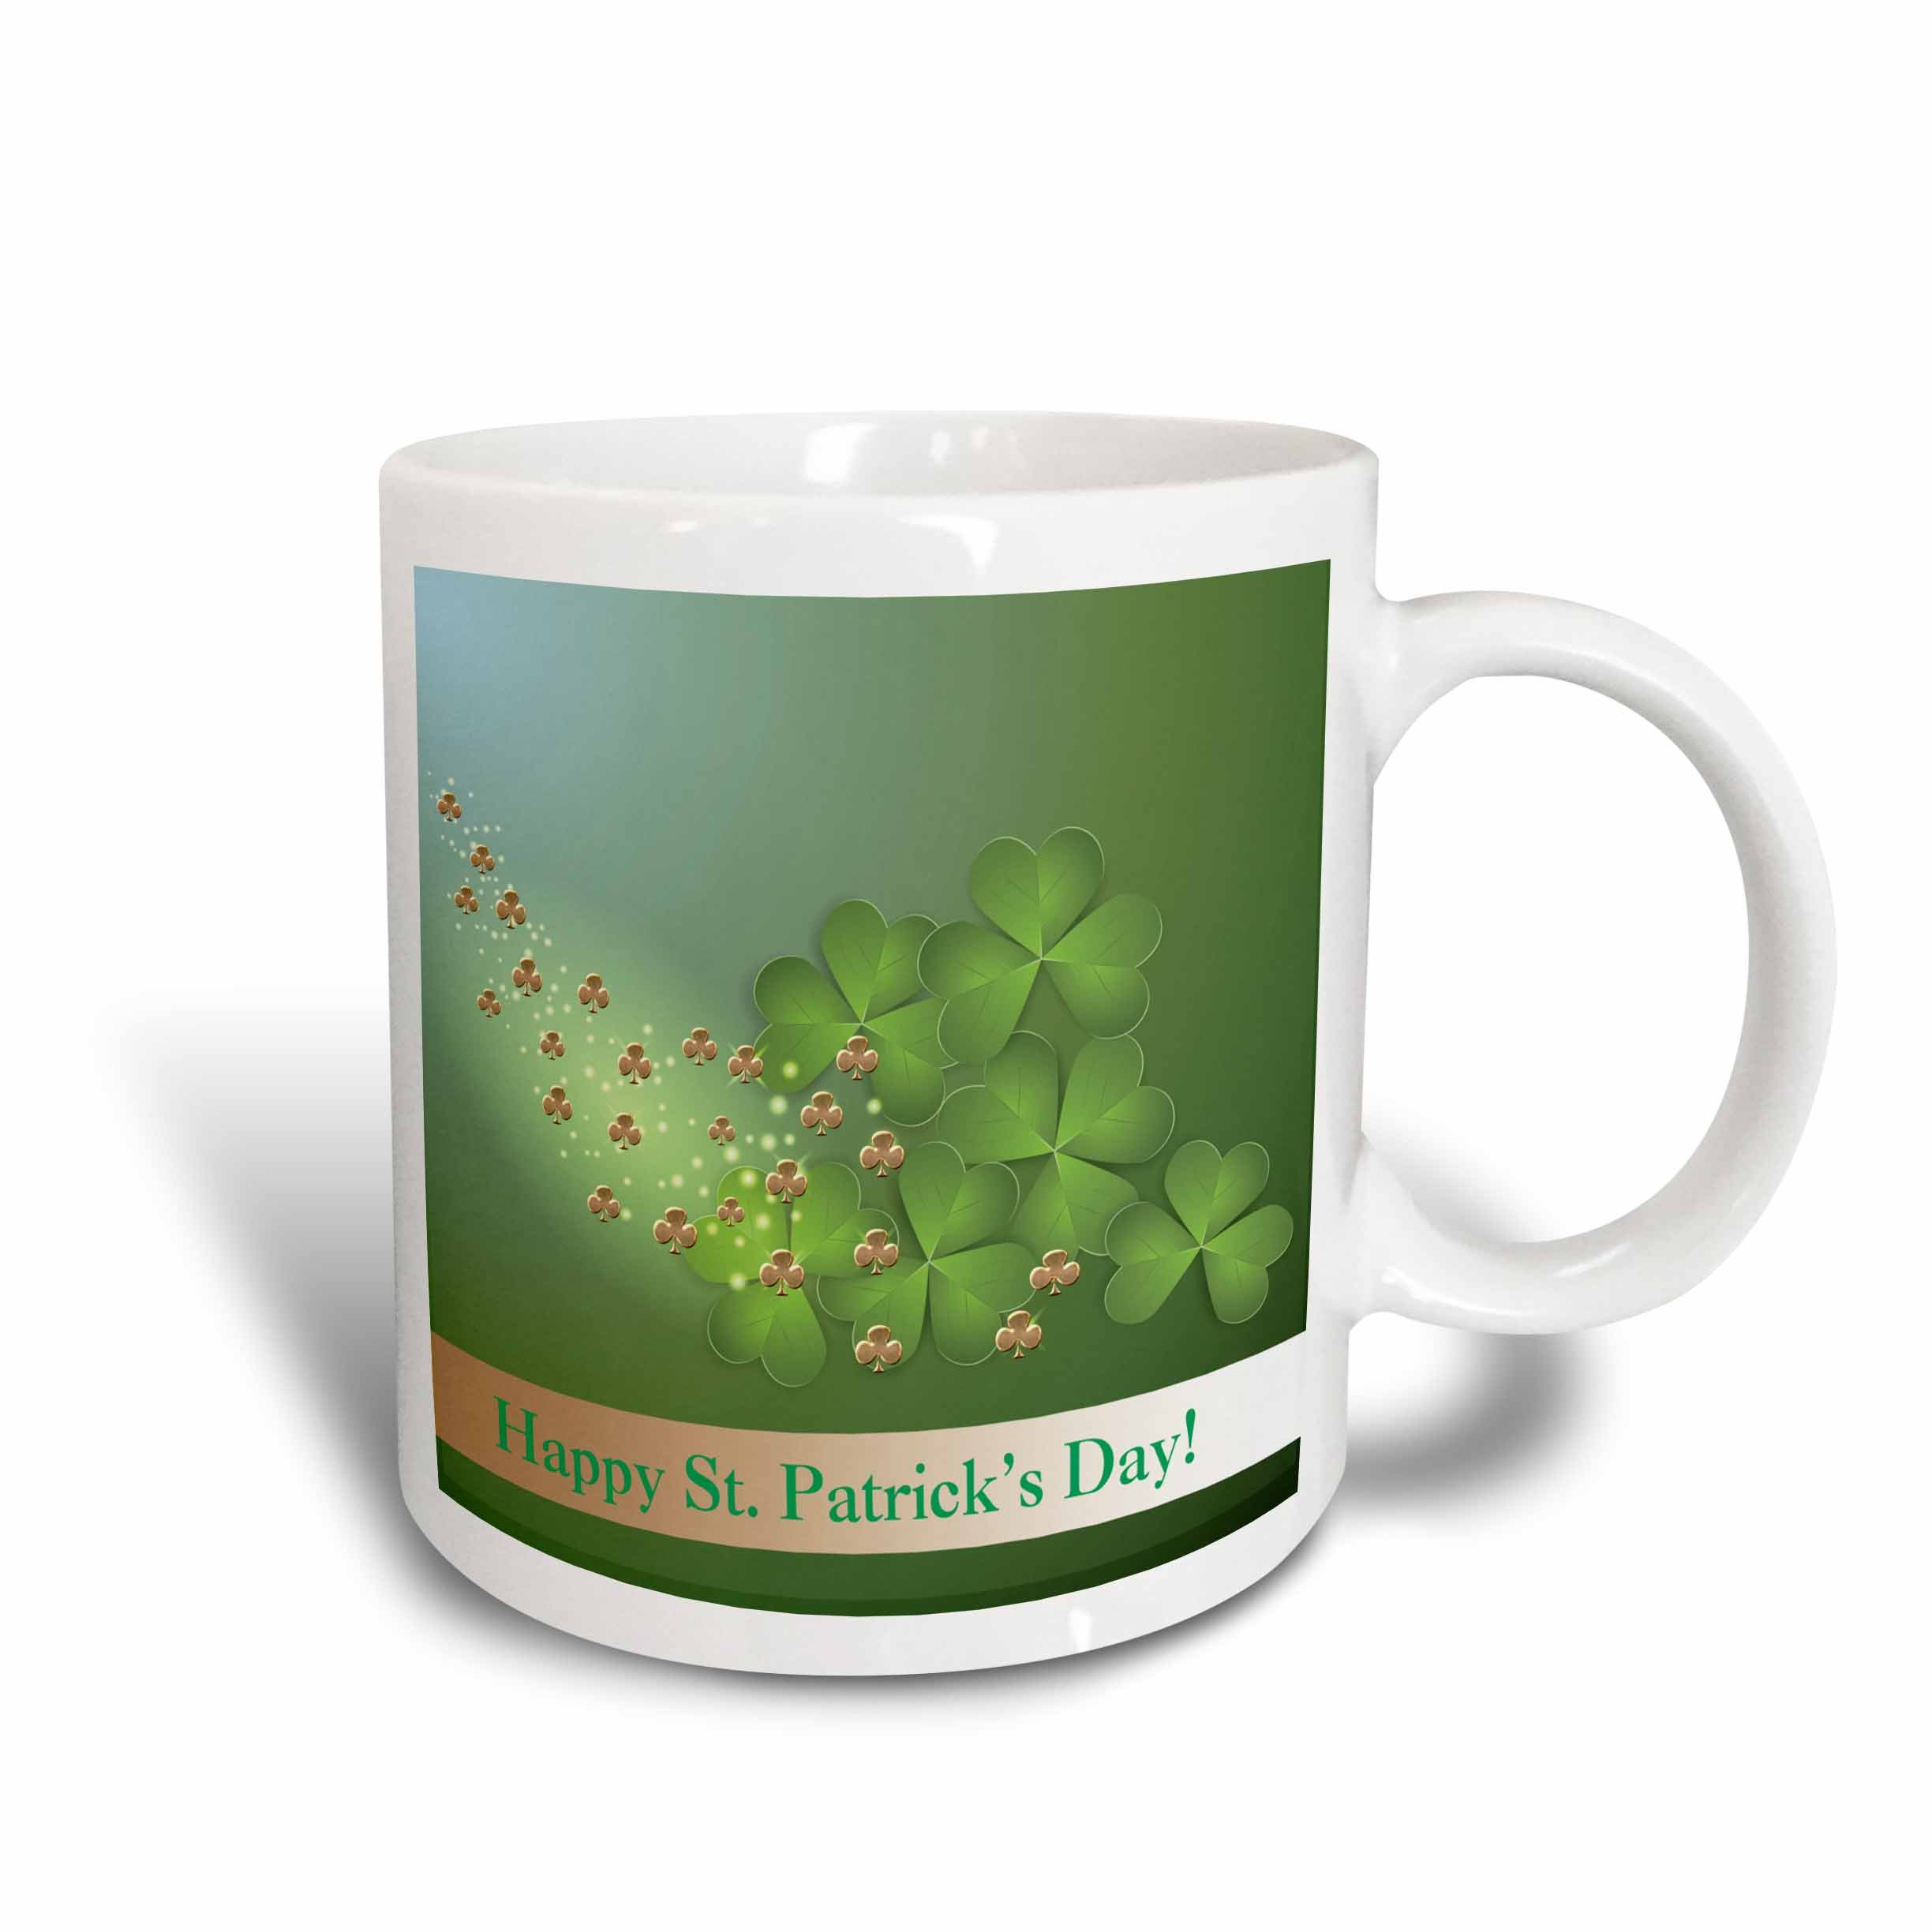 3dRose Beautiful Green And Gold Shamrocks Happy St Patrick's Day Ceramic Mug, 11 oz, Multicolor